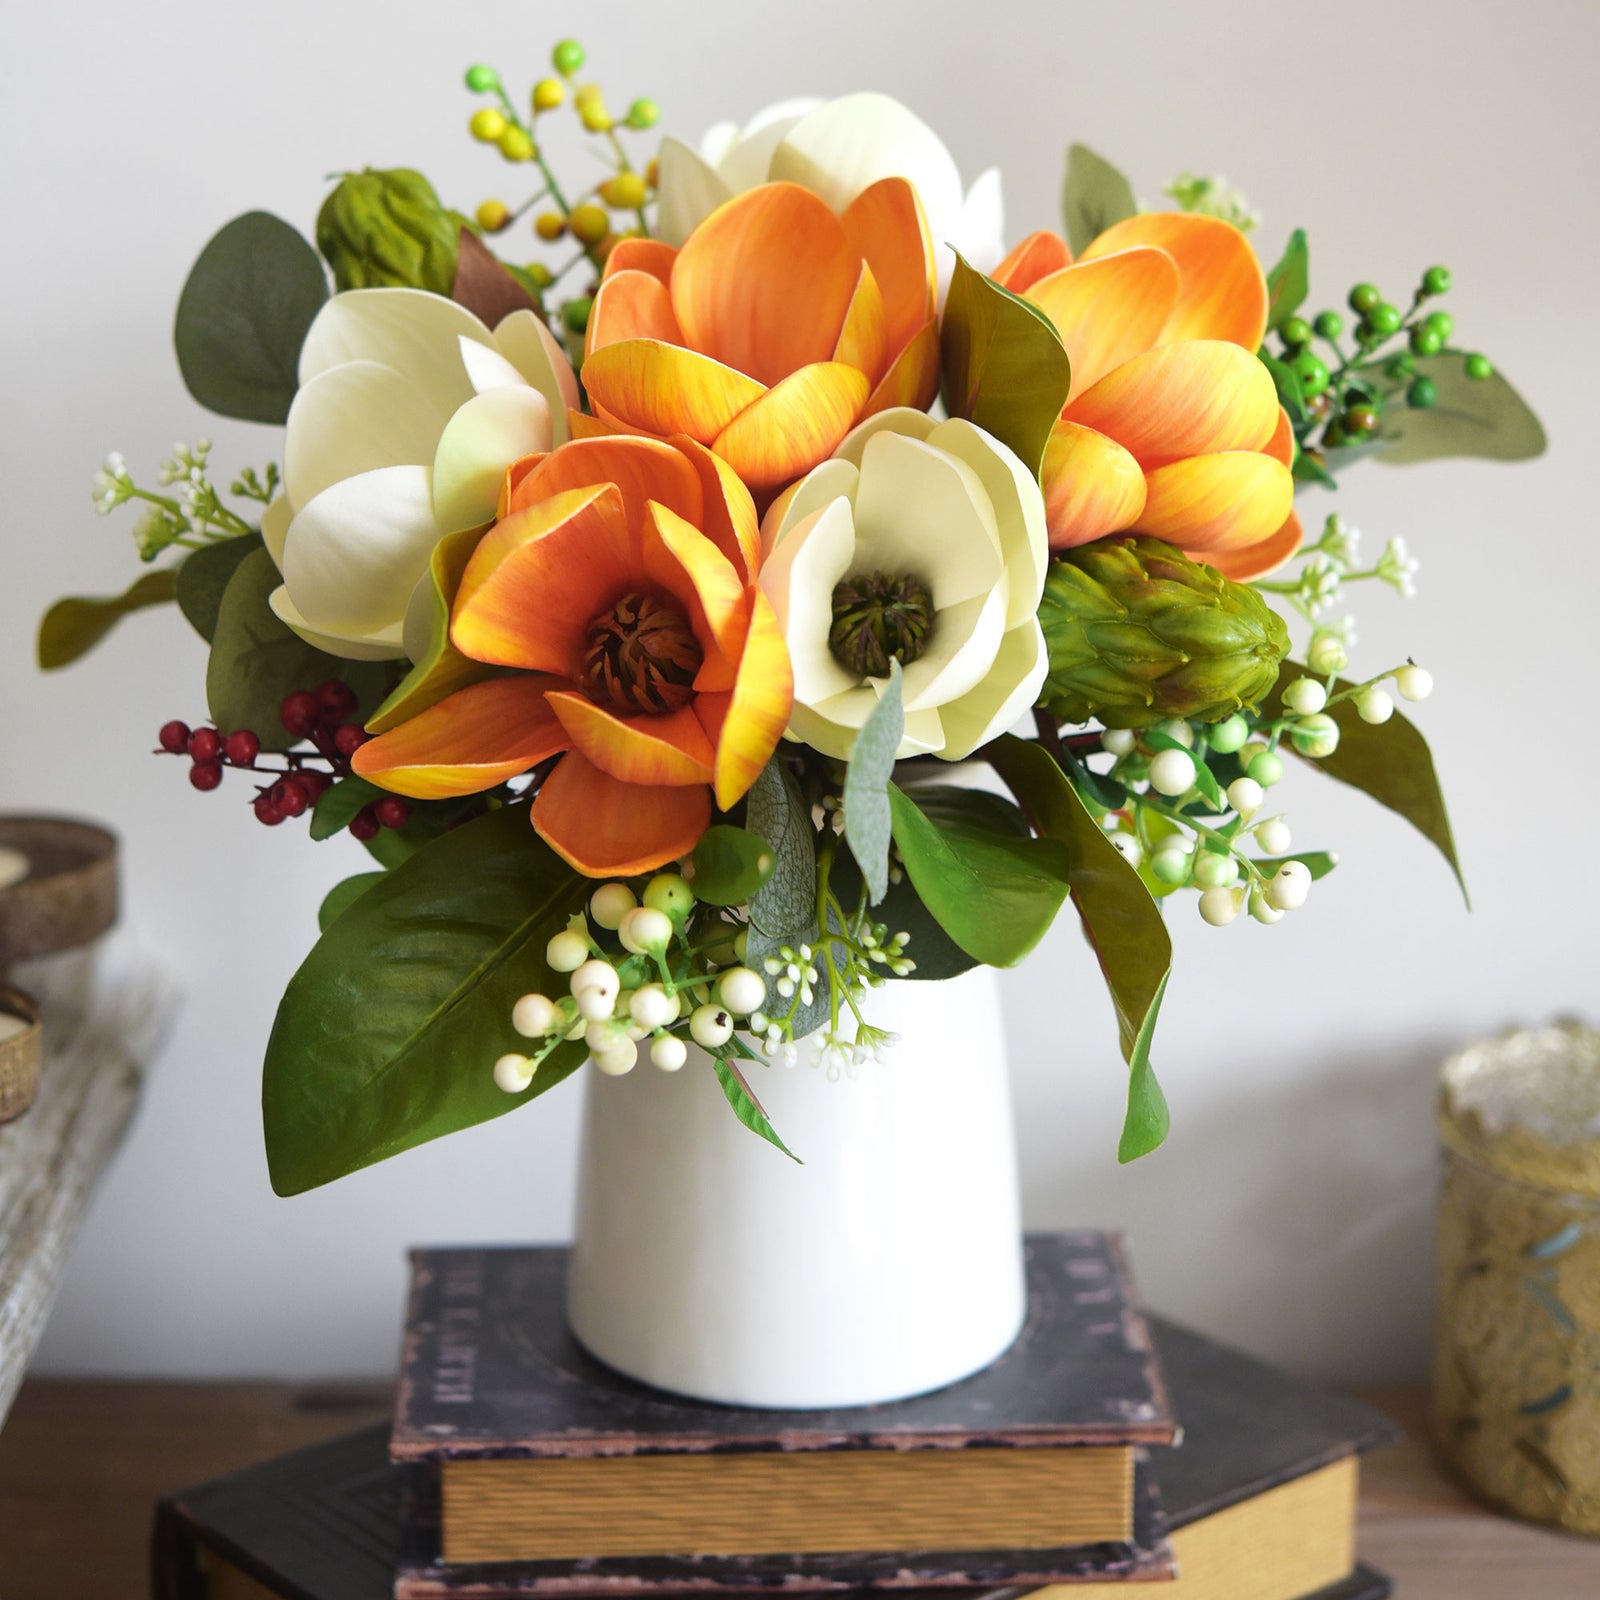 FiveSeasonStuff Friendship Orange Magnolia Artificial Flowers Arrangement with 4 Stems, Wedding Bridesmaids Bouquet Home Decor